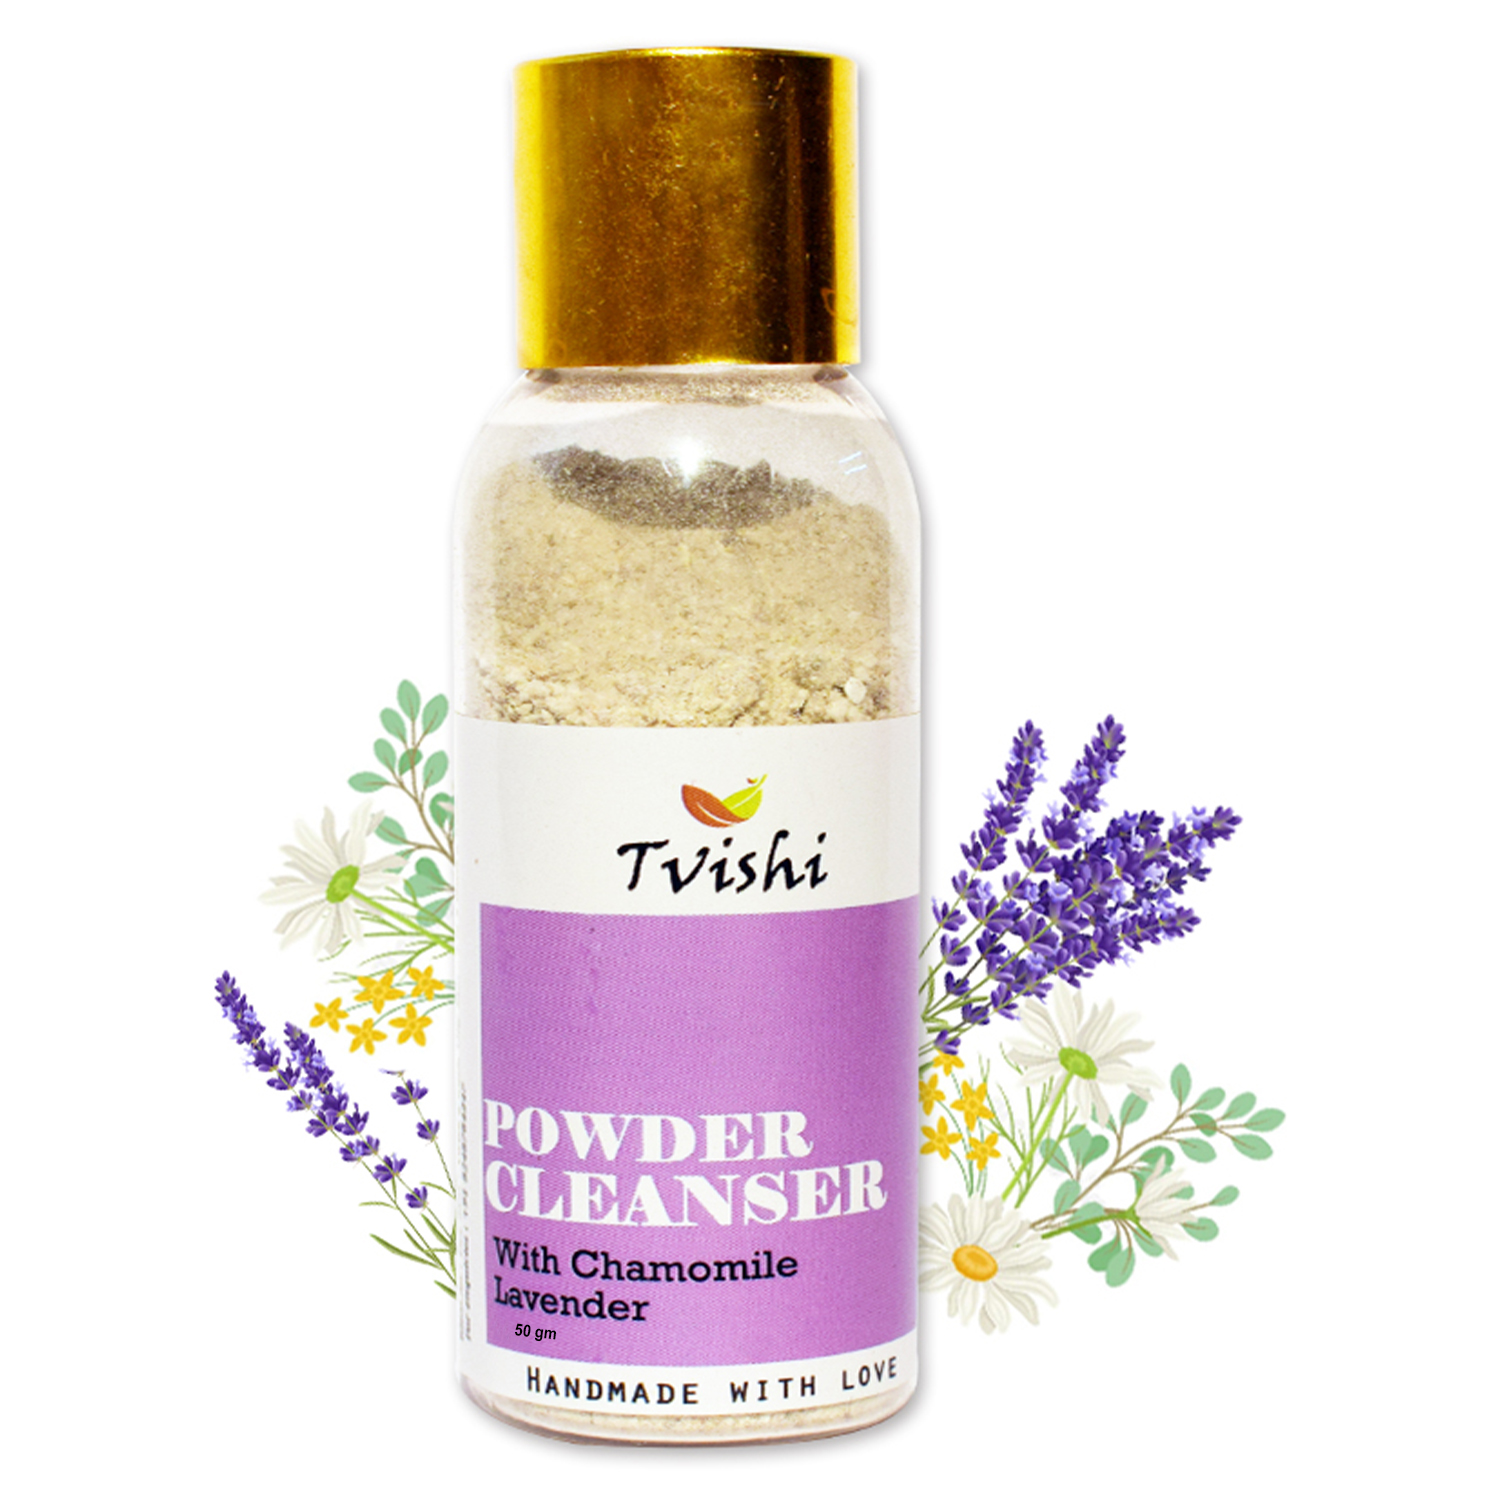 Tvishi Handmade Powder Cleanser With Chamomile & Lavender-50gm